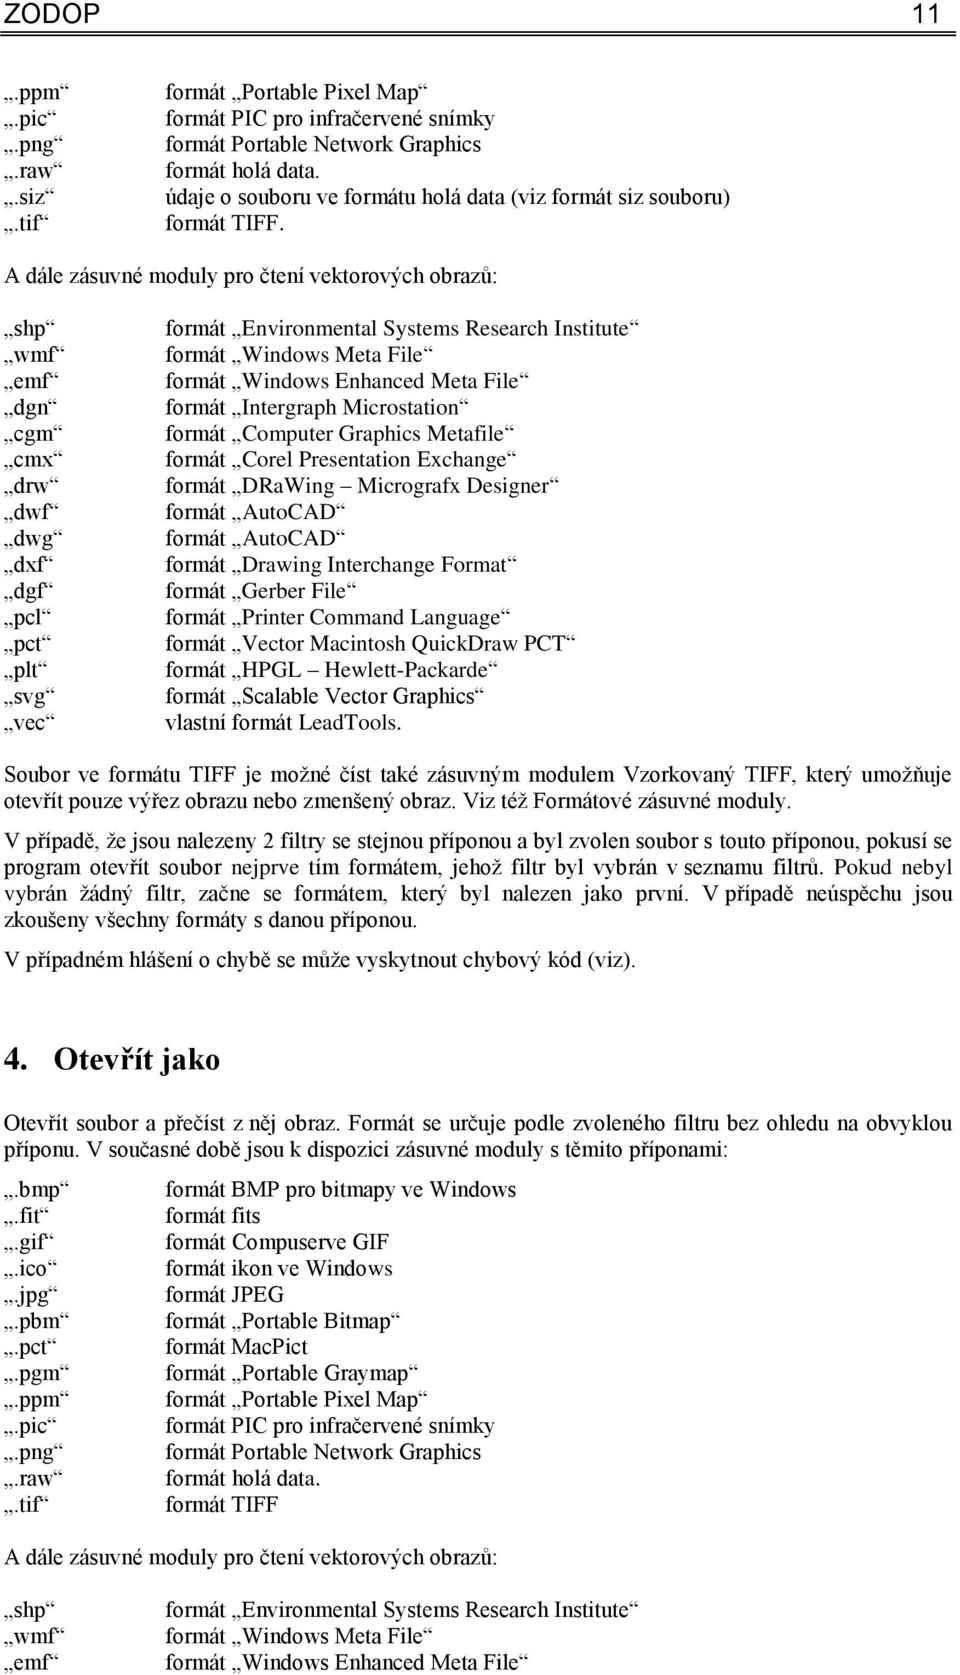 A dále zásuvné moduly pro čtení vektorových obrazů: shp wmf emf dgn cgm cmx drw dwf dwg dxf dgf pcl pct plt svg vec formát Environmental Systems Research Institute formát Windows Meta File formát